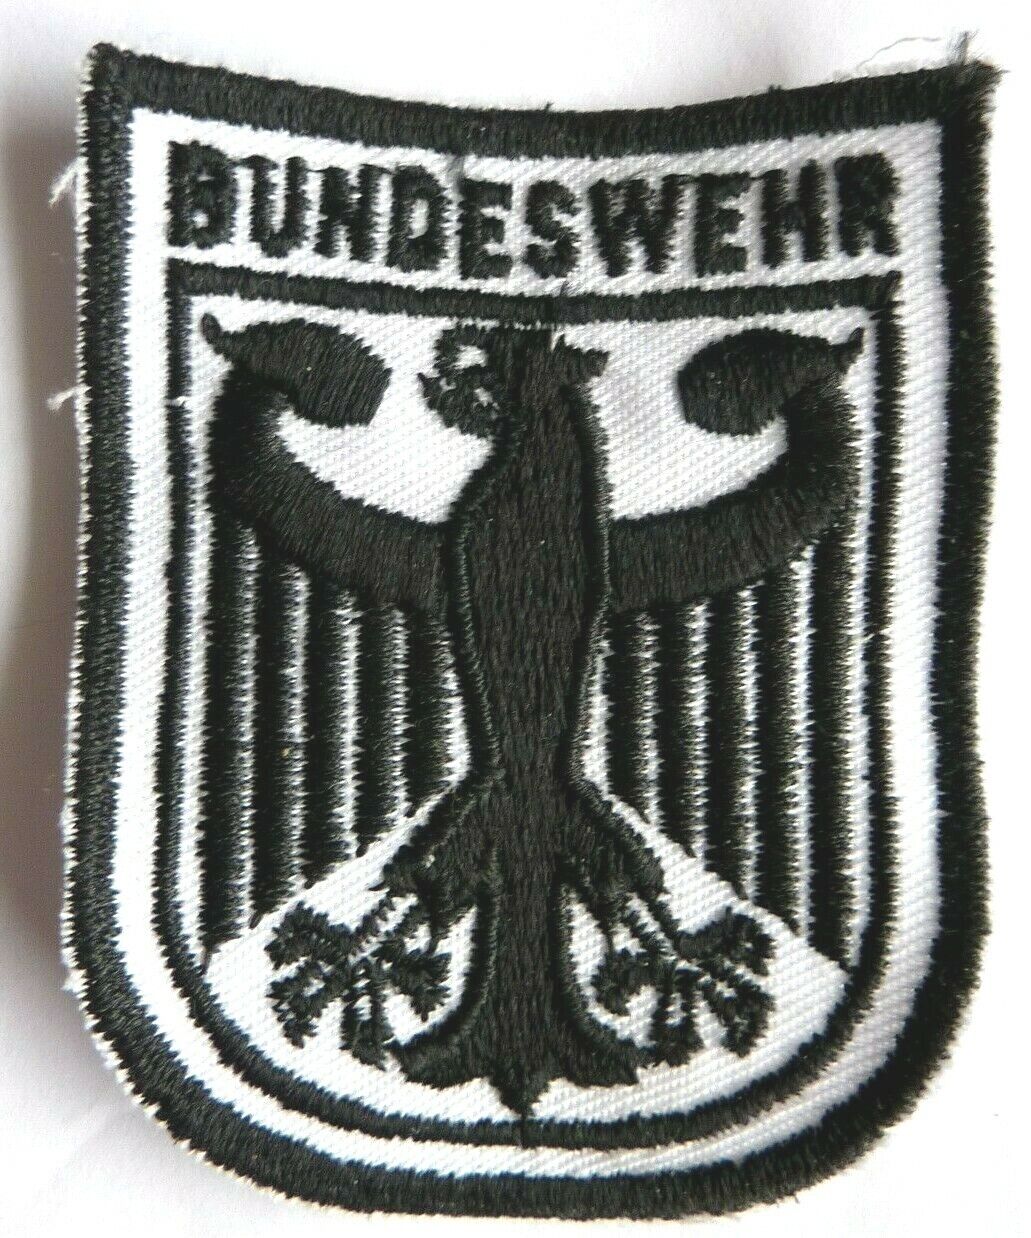 Bundeswehr German Army Patch